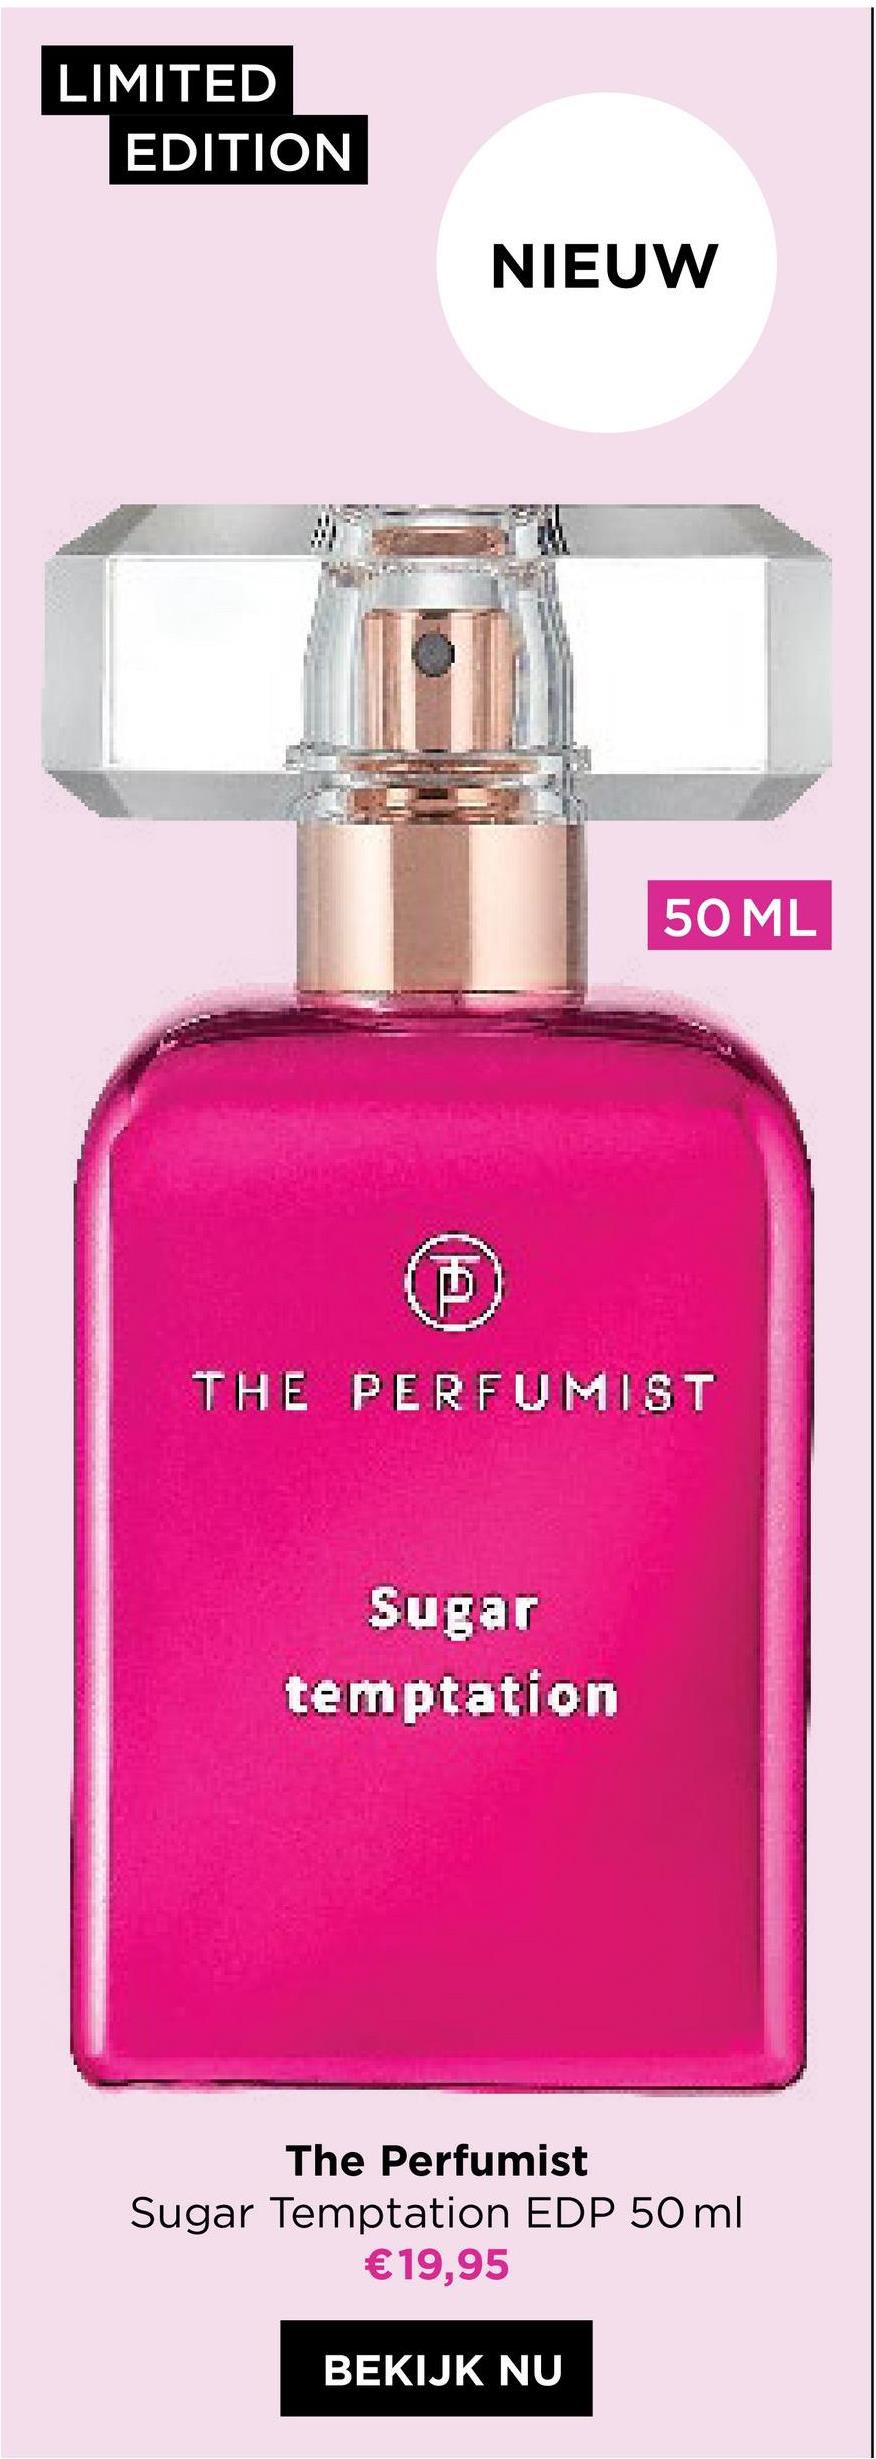 LIMITED
EDITION
D
NIEUW
THE PERFUMIST
Sugar
temptation
50 ML
The Perfumist
Sugar Temptation EDP 50ml
€19,95
BEKIJK NU